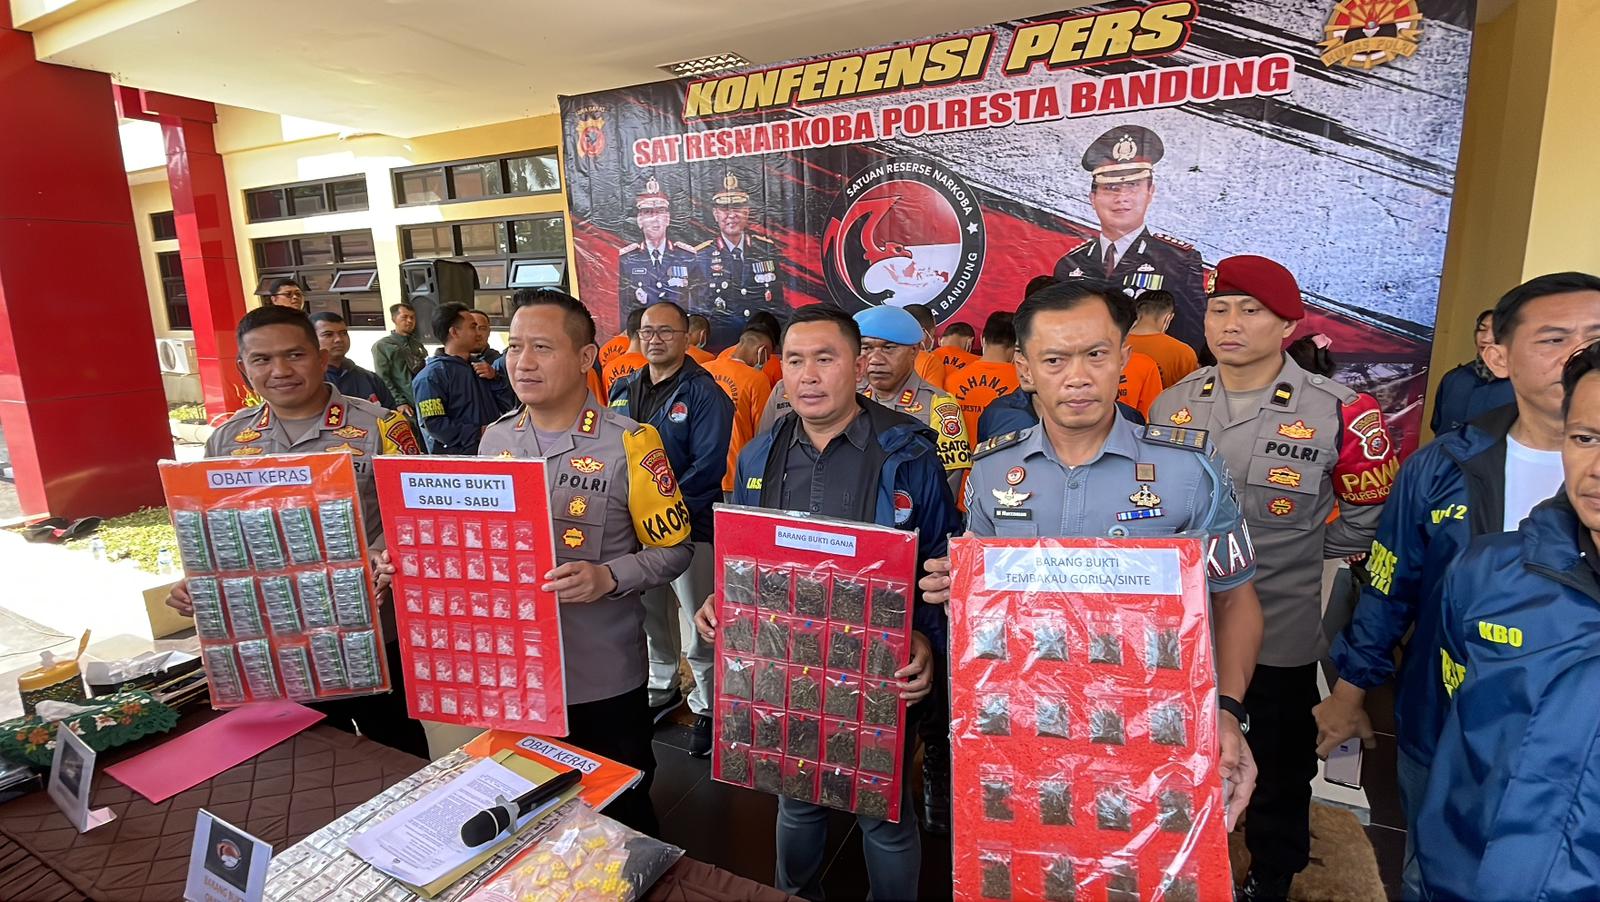 Polresta bandung saat menunjukan barang bukti penyelundupan barang bukti narkotika beberapa jenis saat gelar perkara di Mapolresta Bandung, Selasa (30/7). Foto Agi Jabar Ekspres